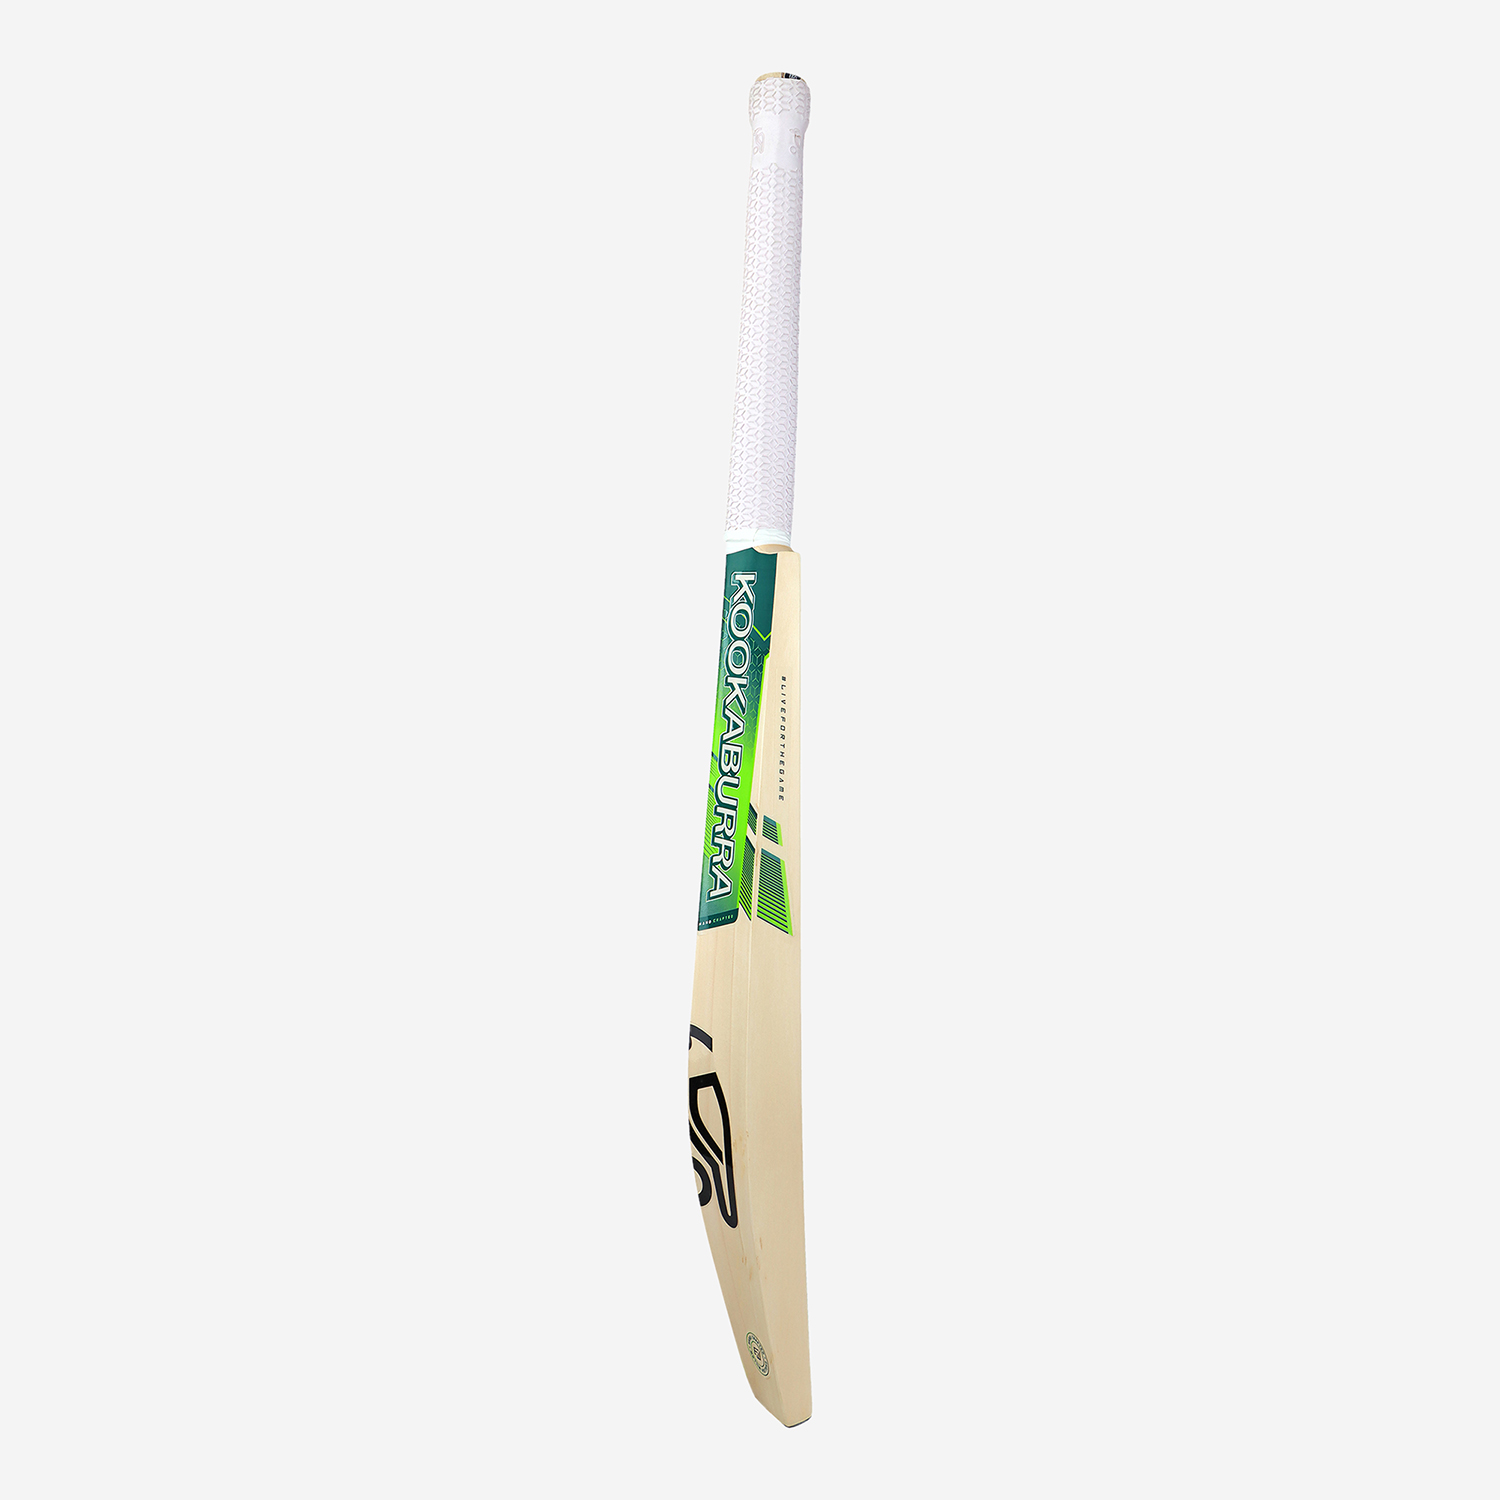 Pro 1.0 Kahuna Senior Cricket Bat